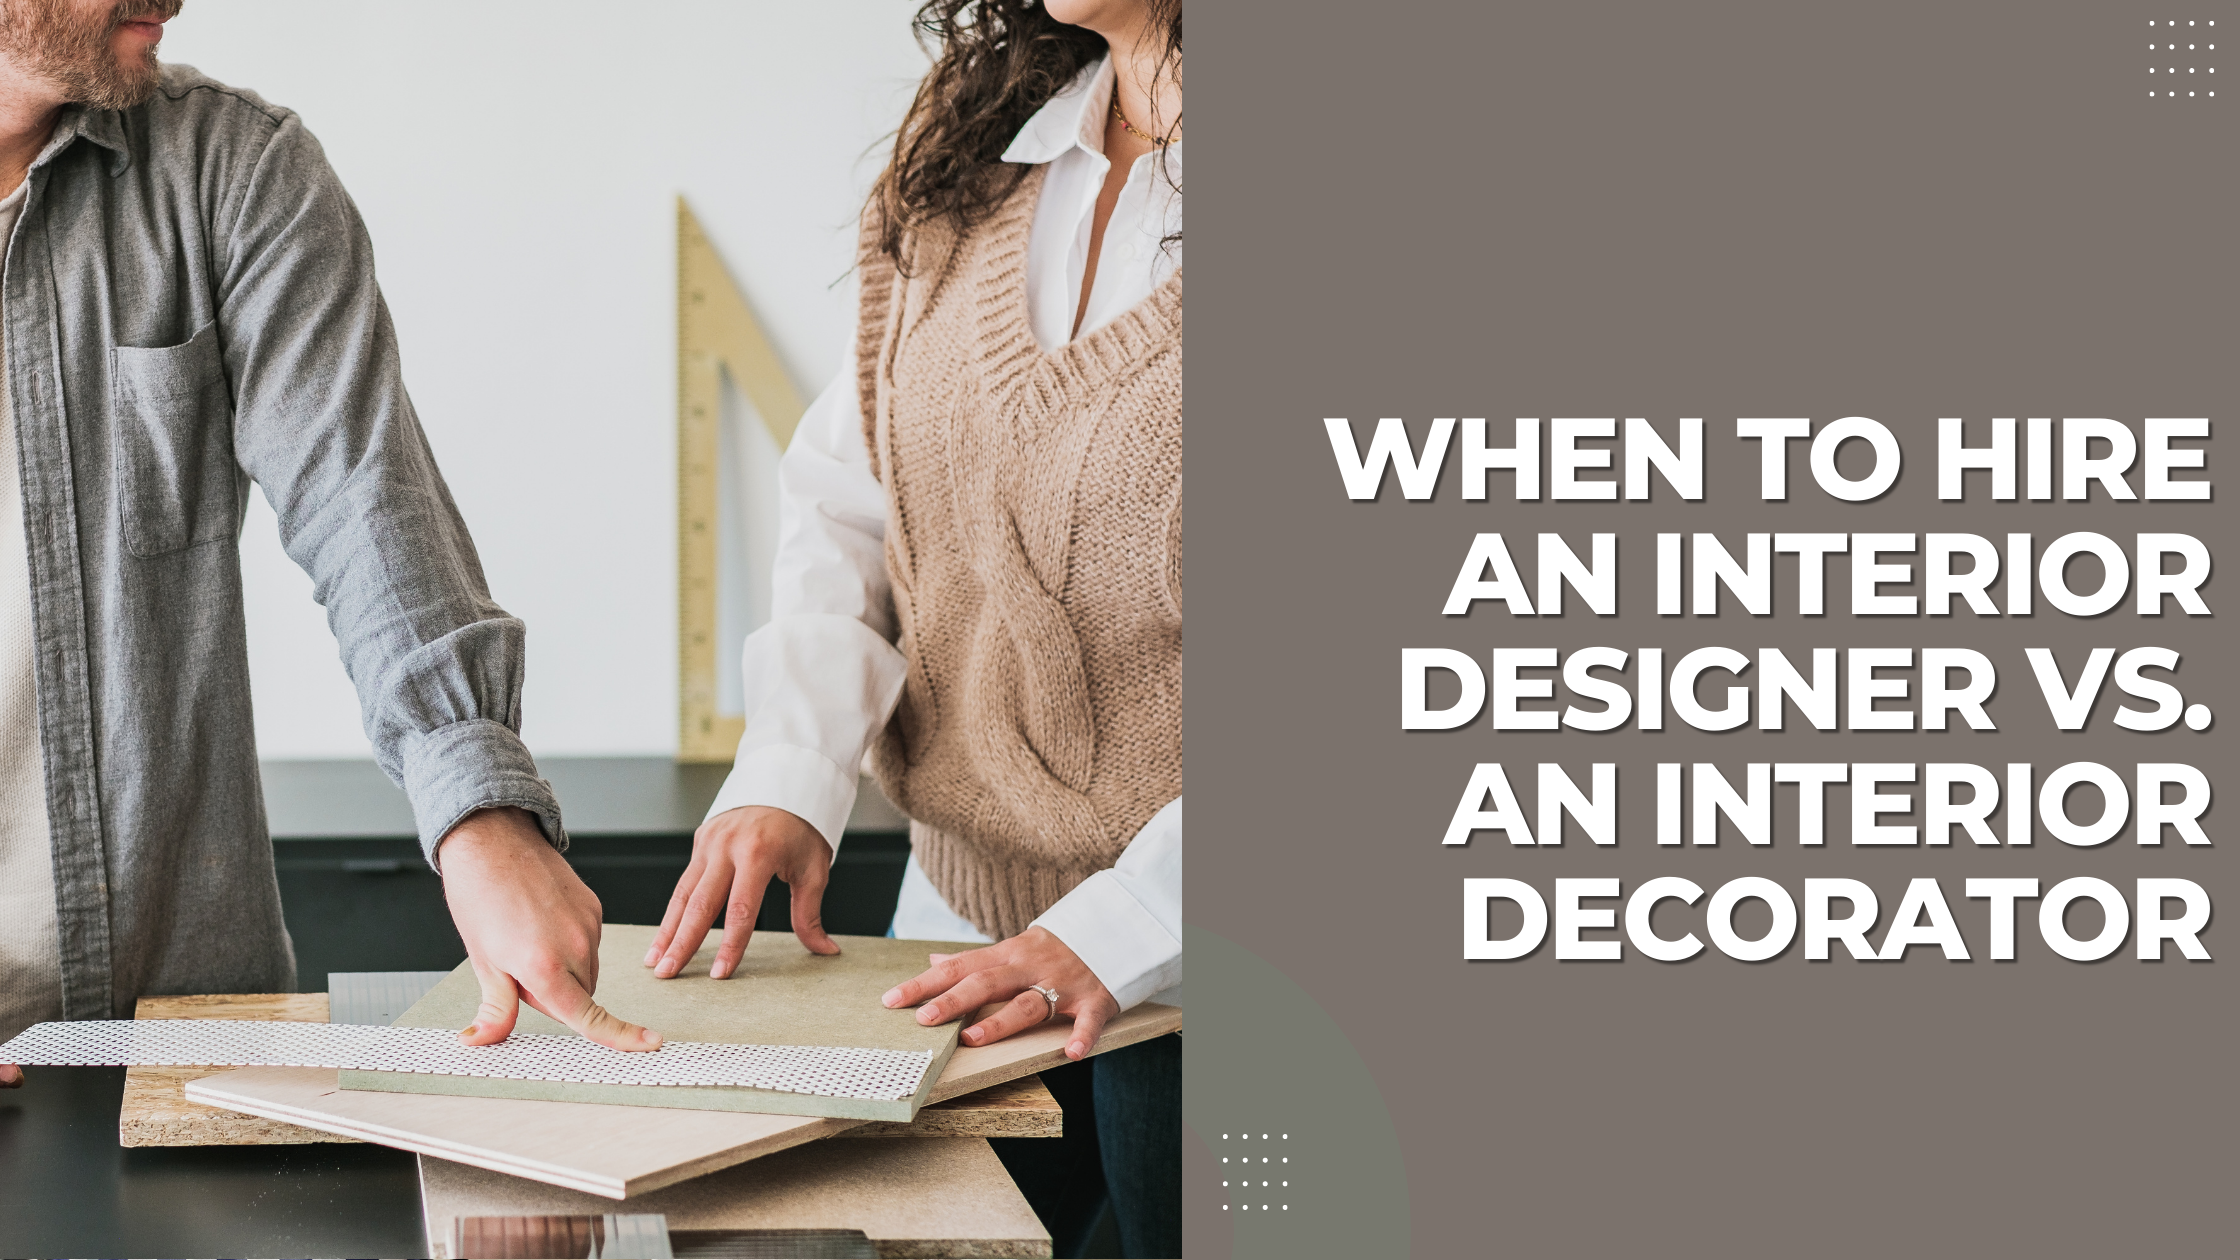 When to Hire an Interior Designer vs. an Interior Decorator